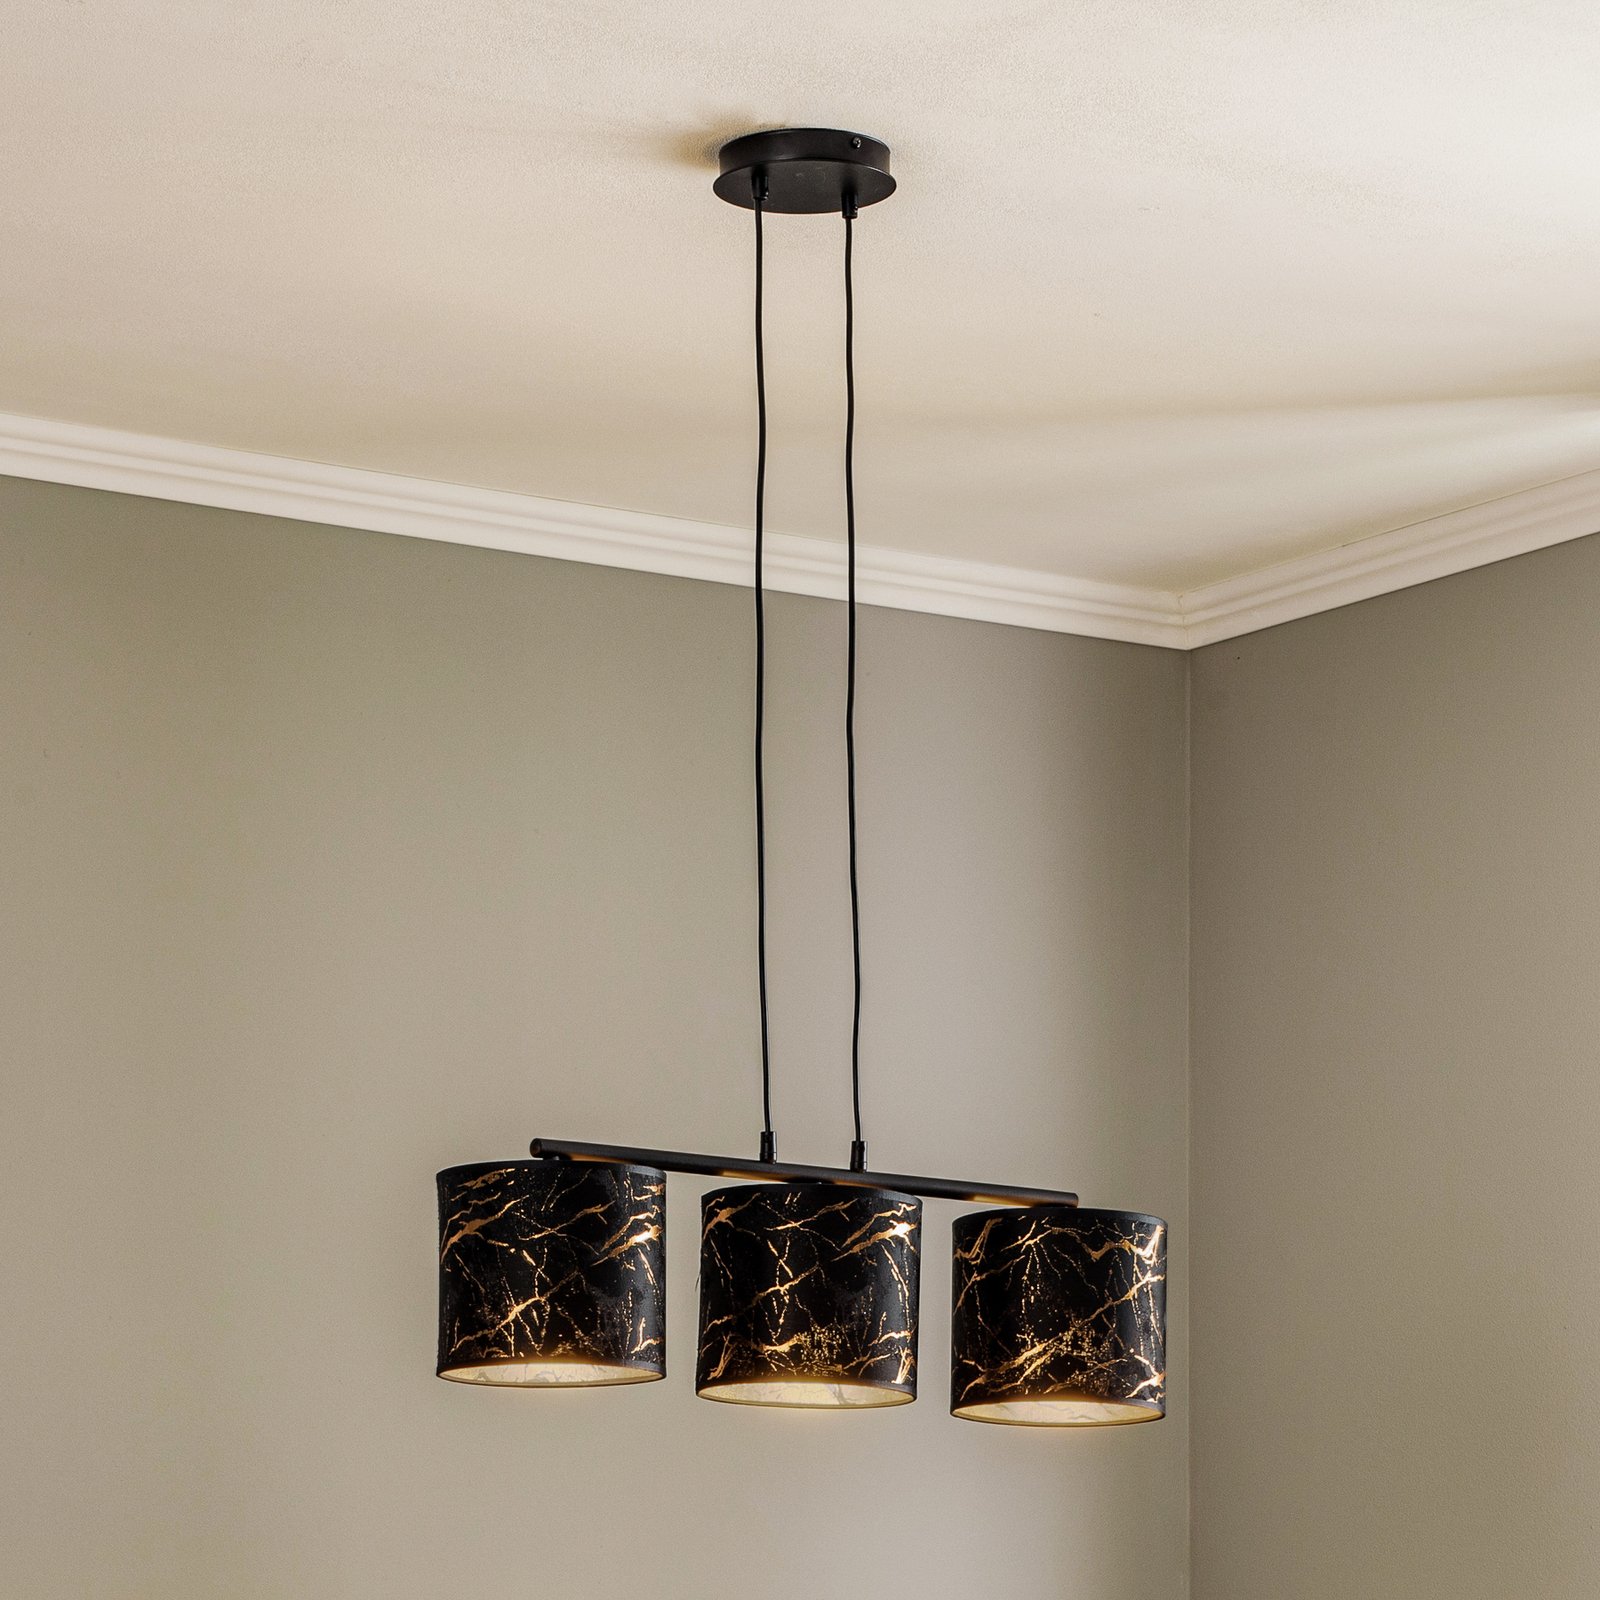 Jari hanging light 3-bulb long marbled black